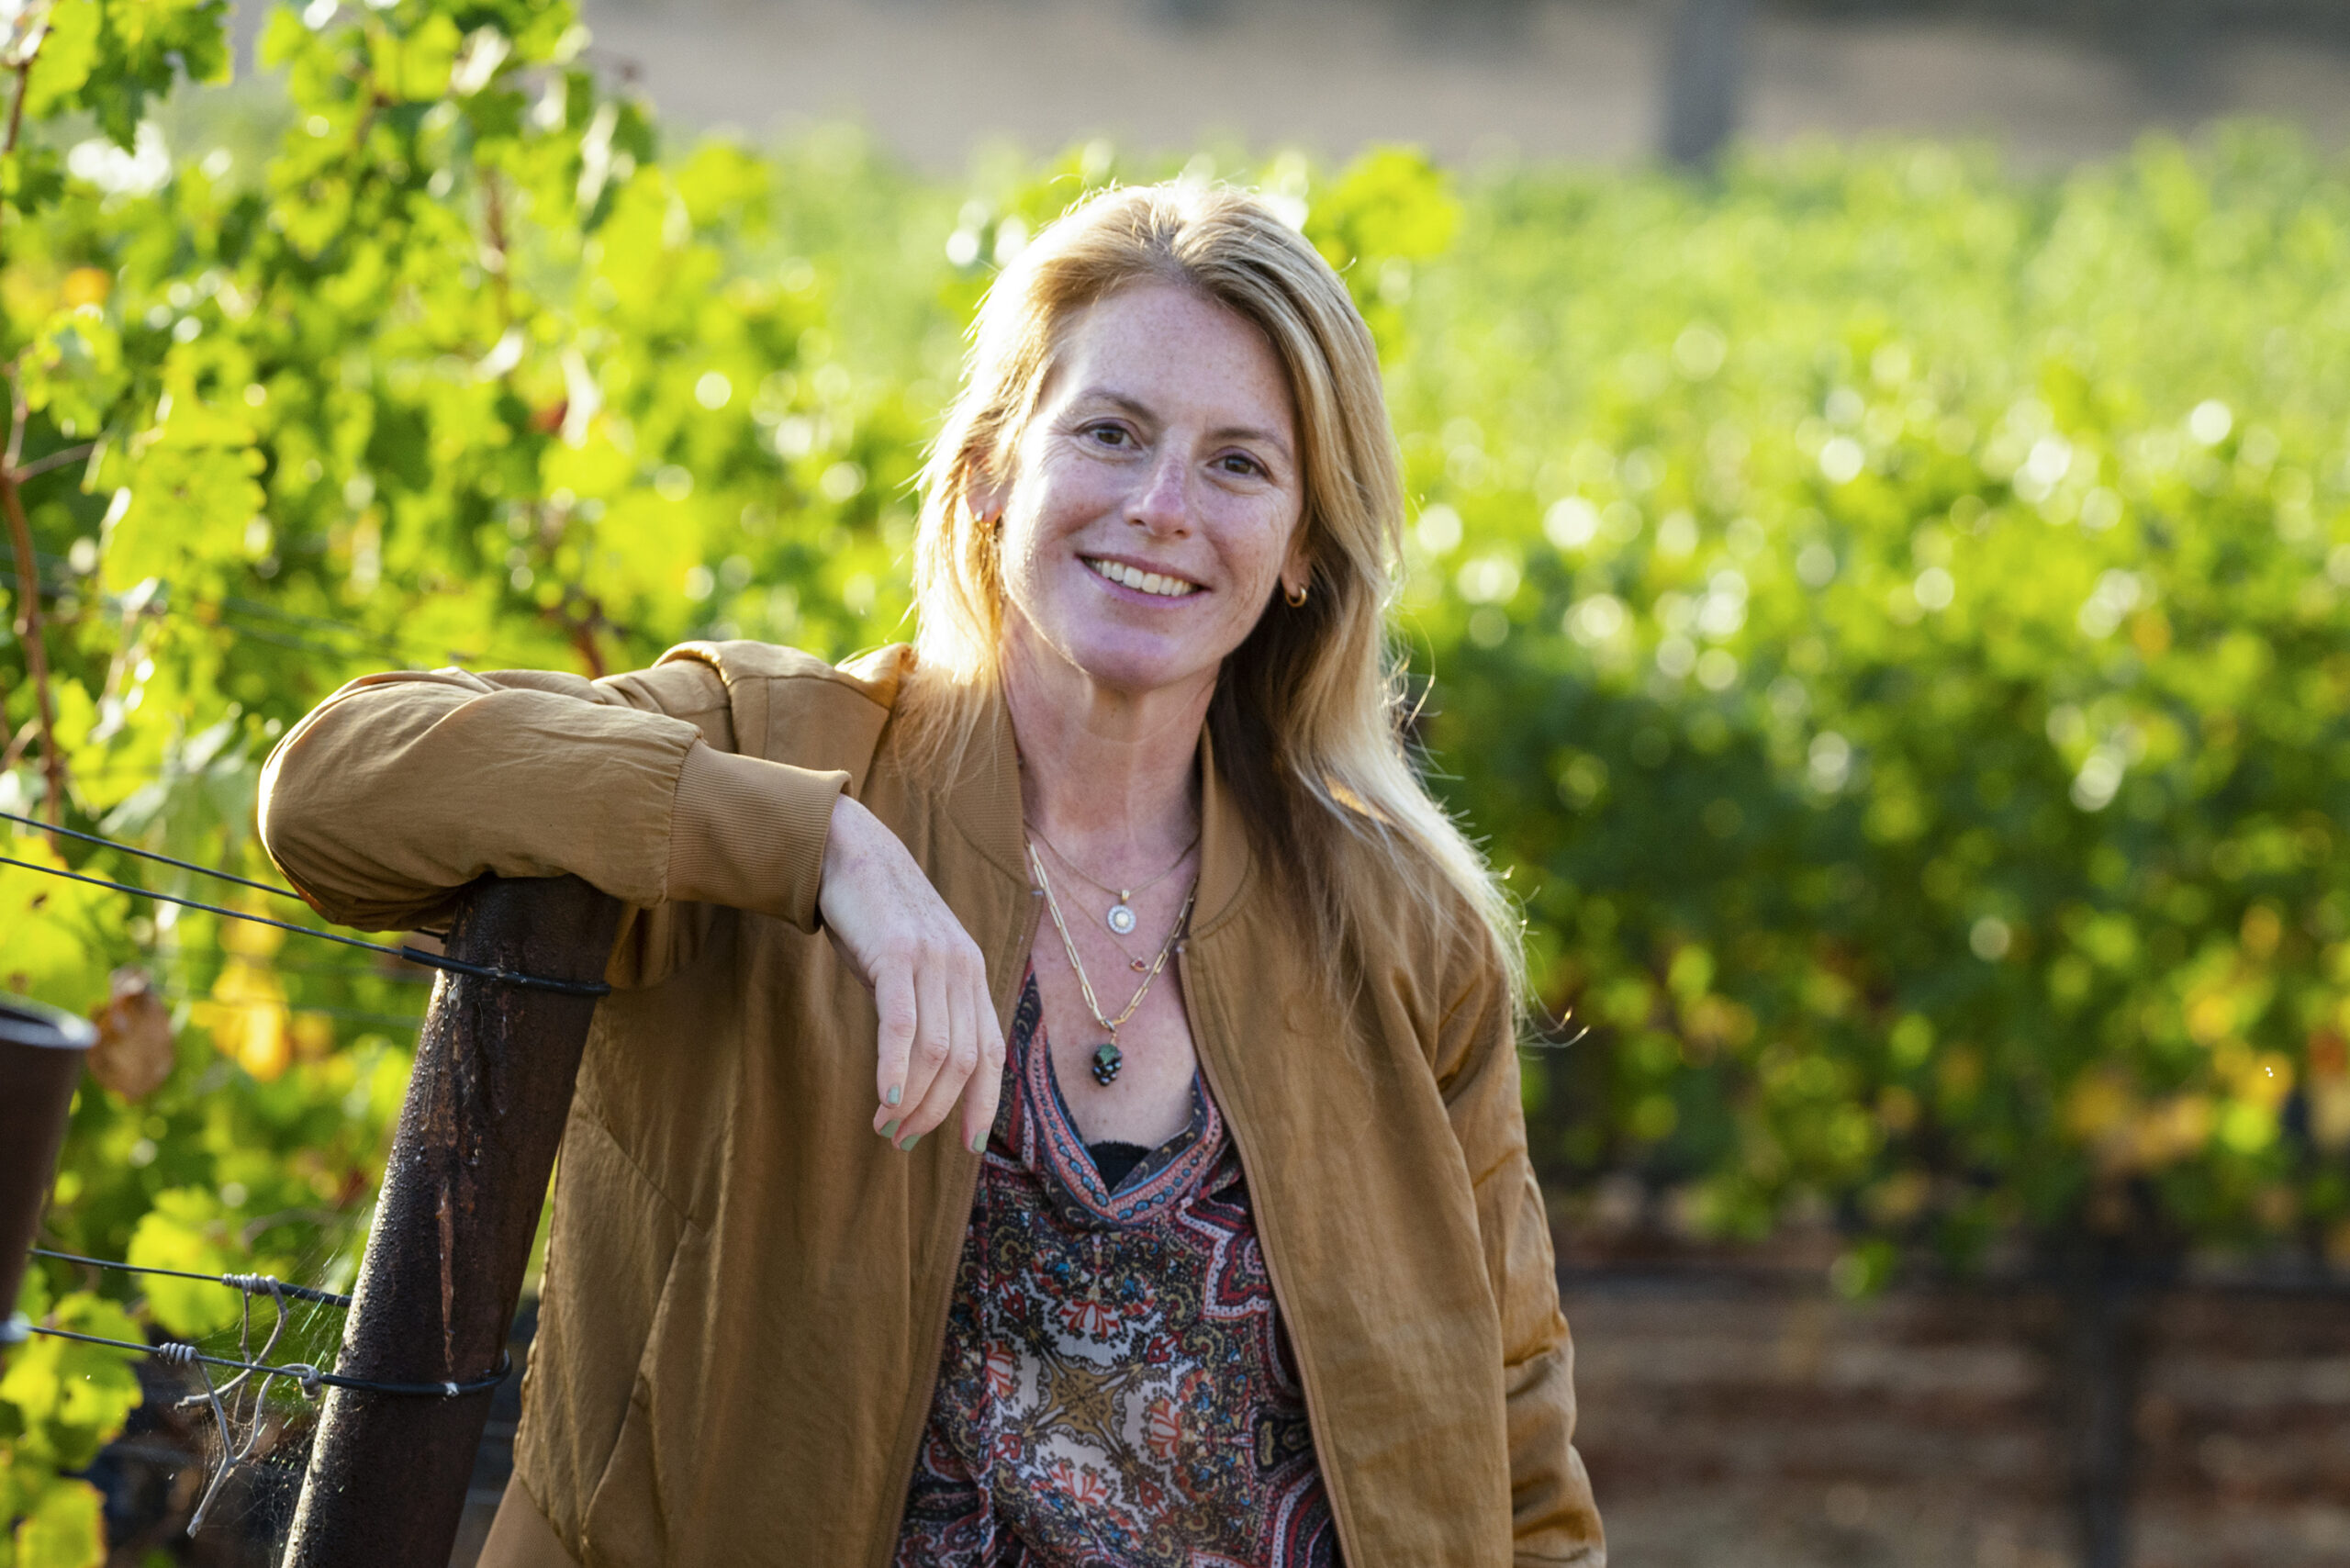 Rachel Martin, Founder of Oceano Wines, hanging out in sunny Vineyard